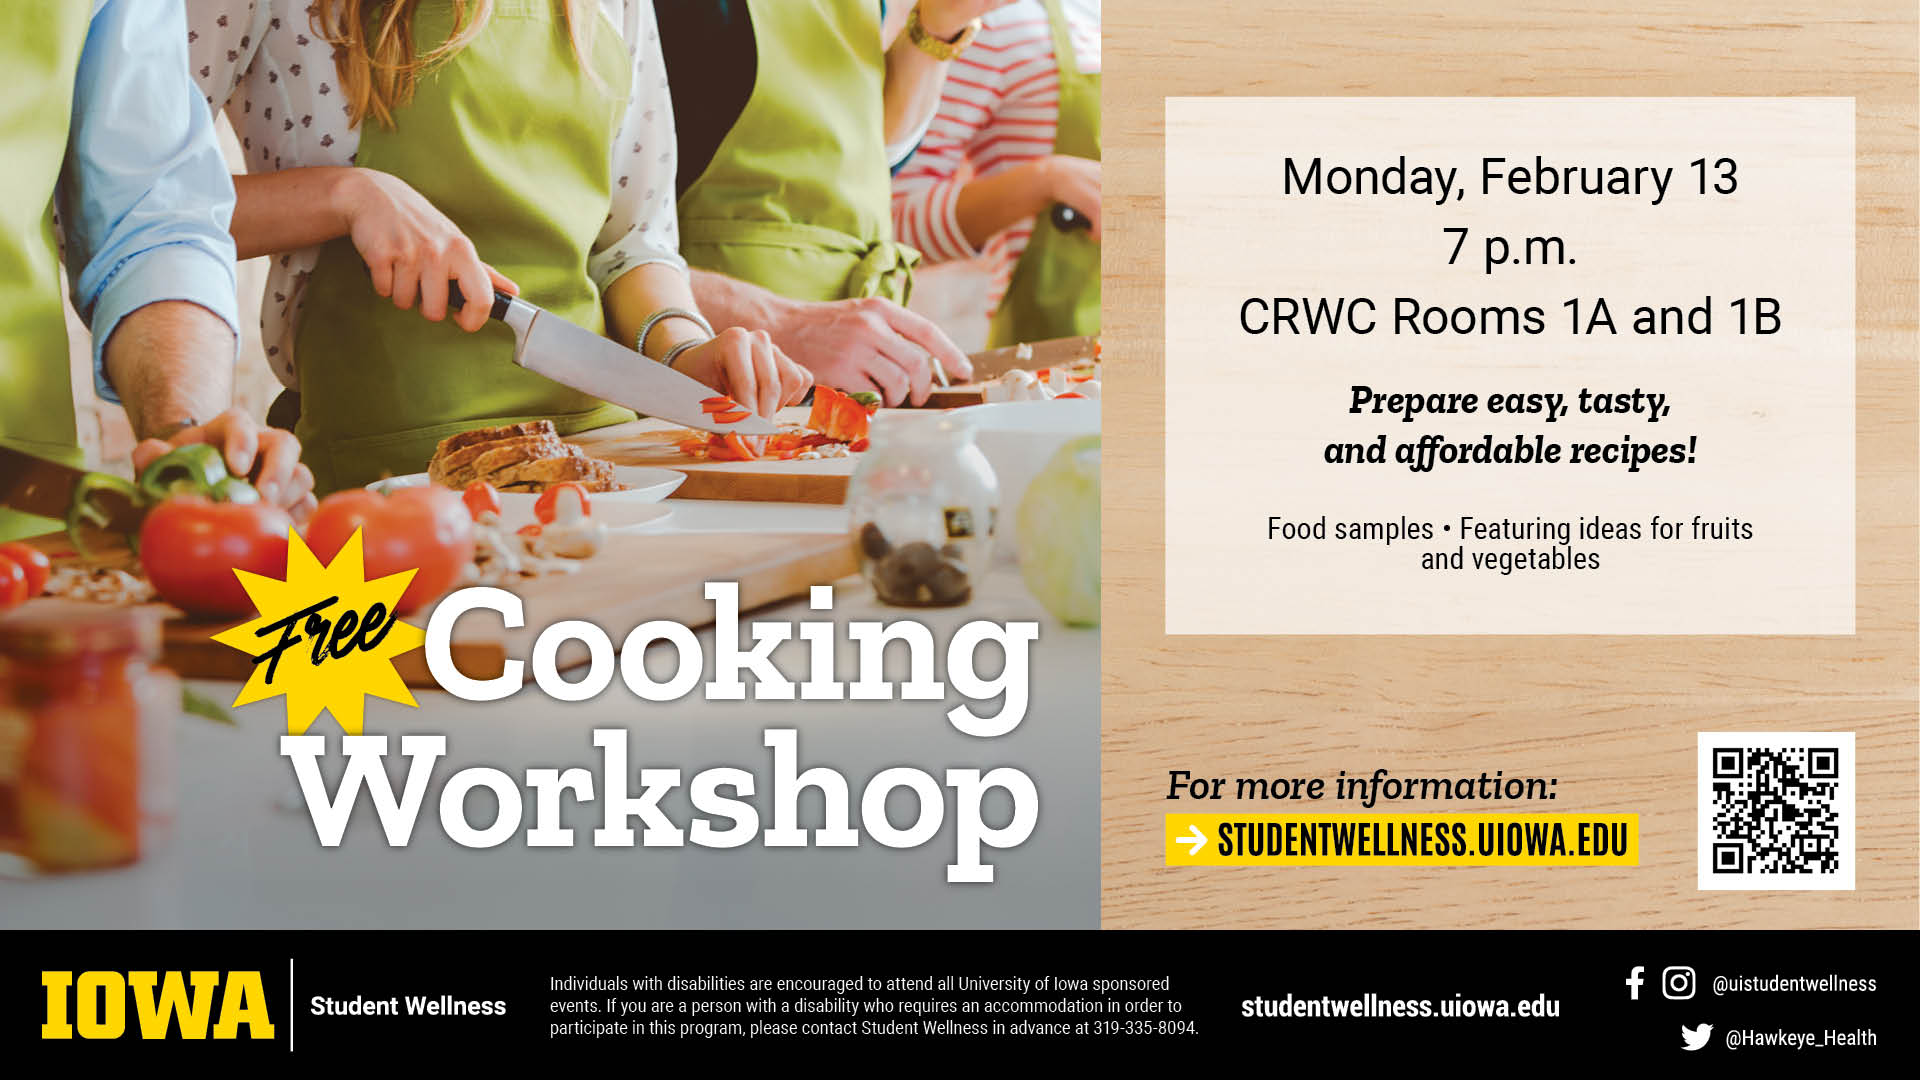 Cooking Workshop Monday, February 13 at 7pm CRWC Rooms 1A and 1B studentwellness.uiowa.edu